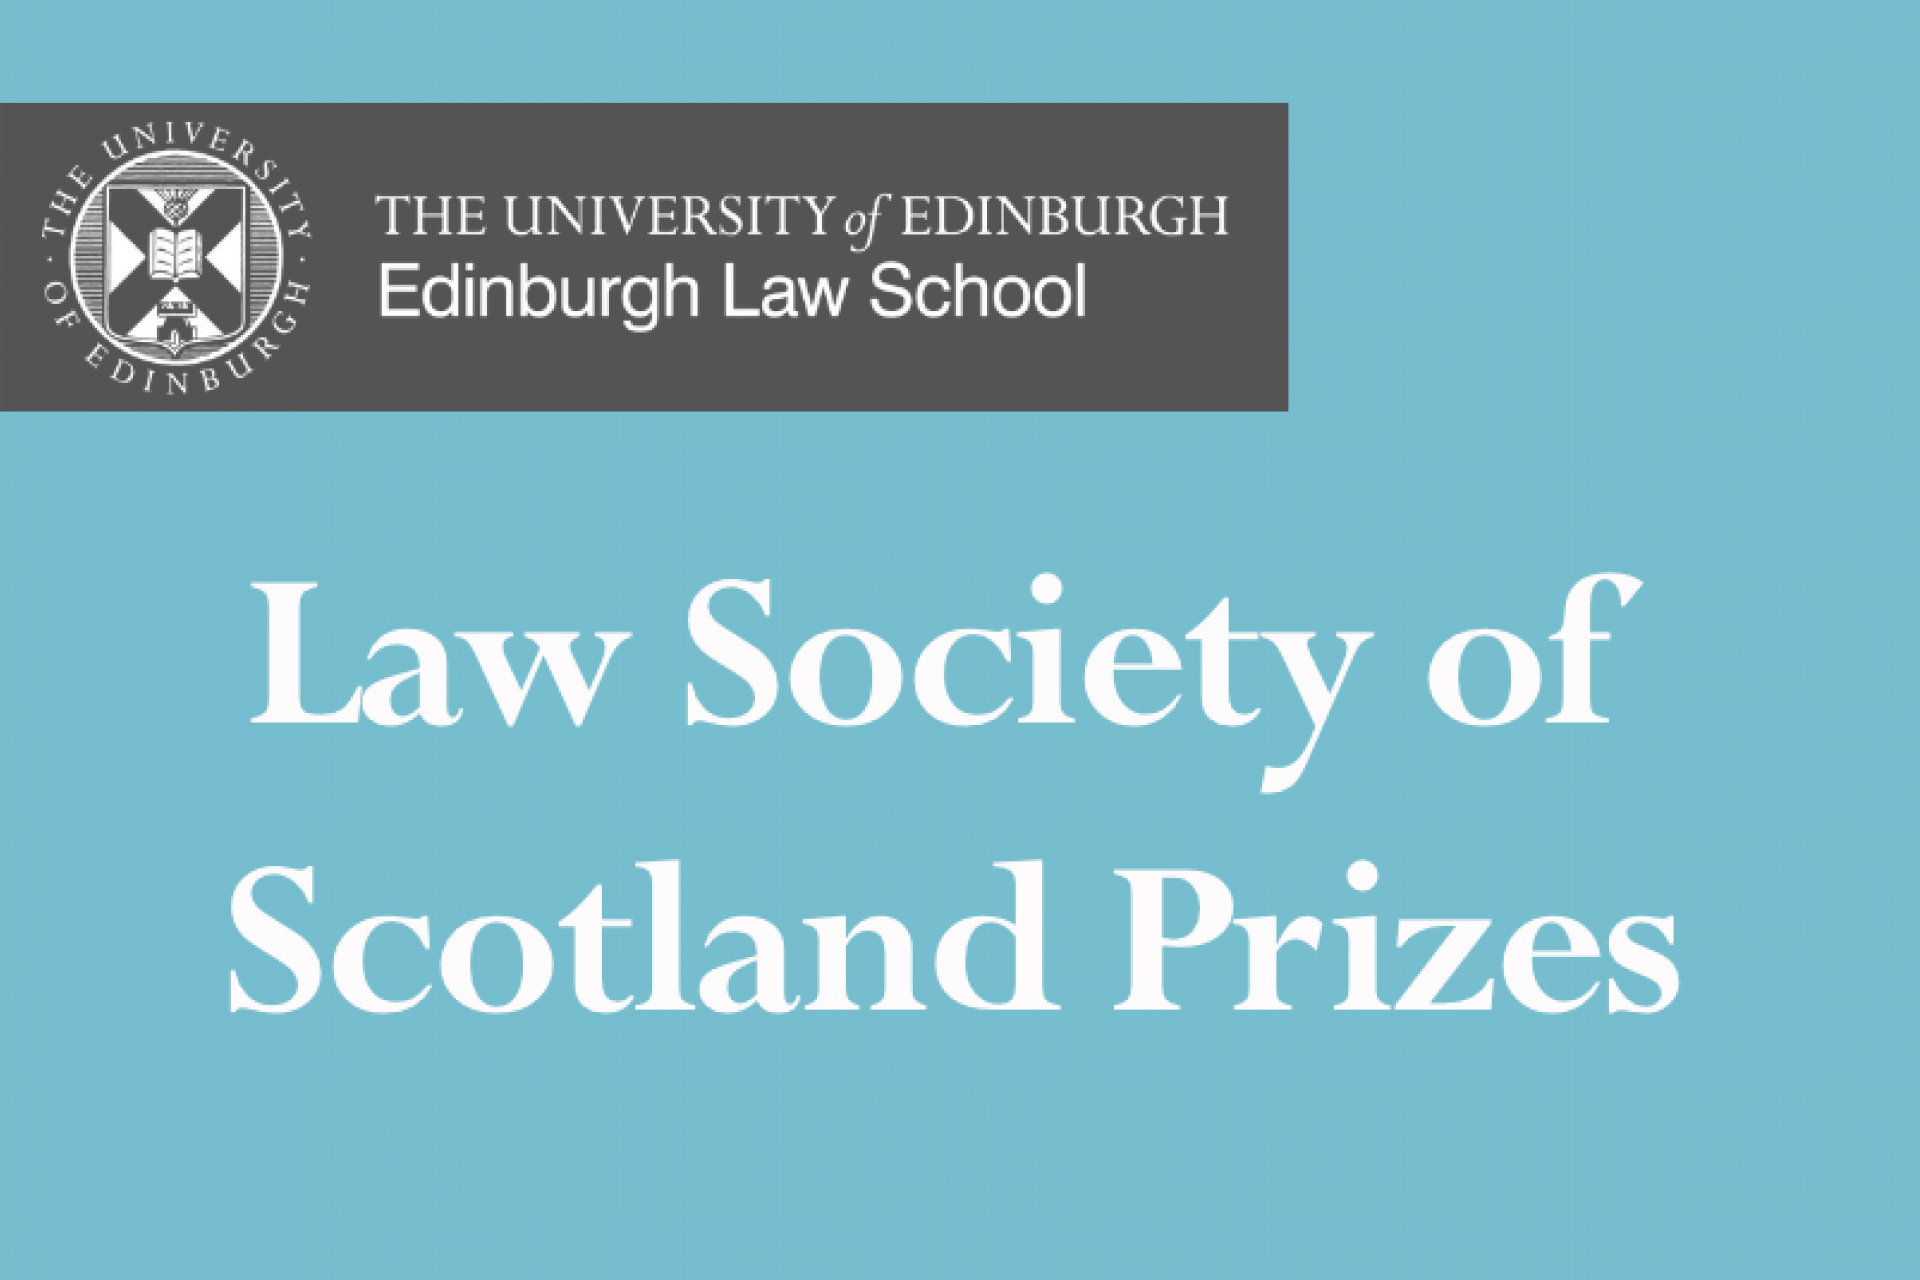 Law Society of Scotland Prizes